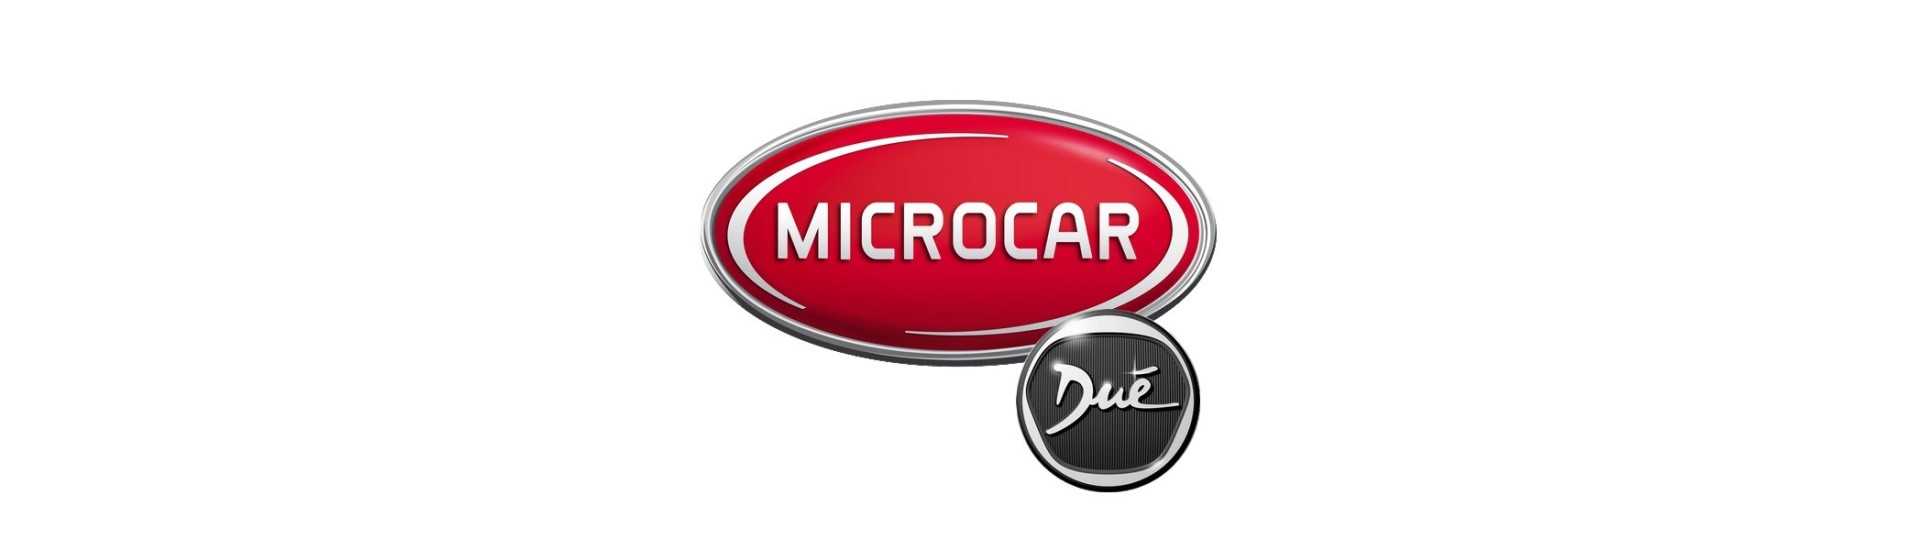 Paras hinta autolle ilman lupaa Microcar Dué